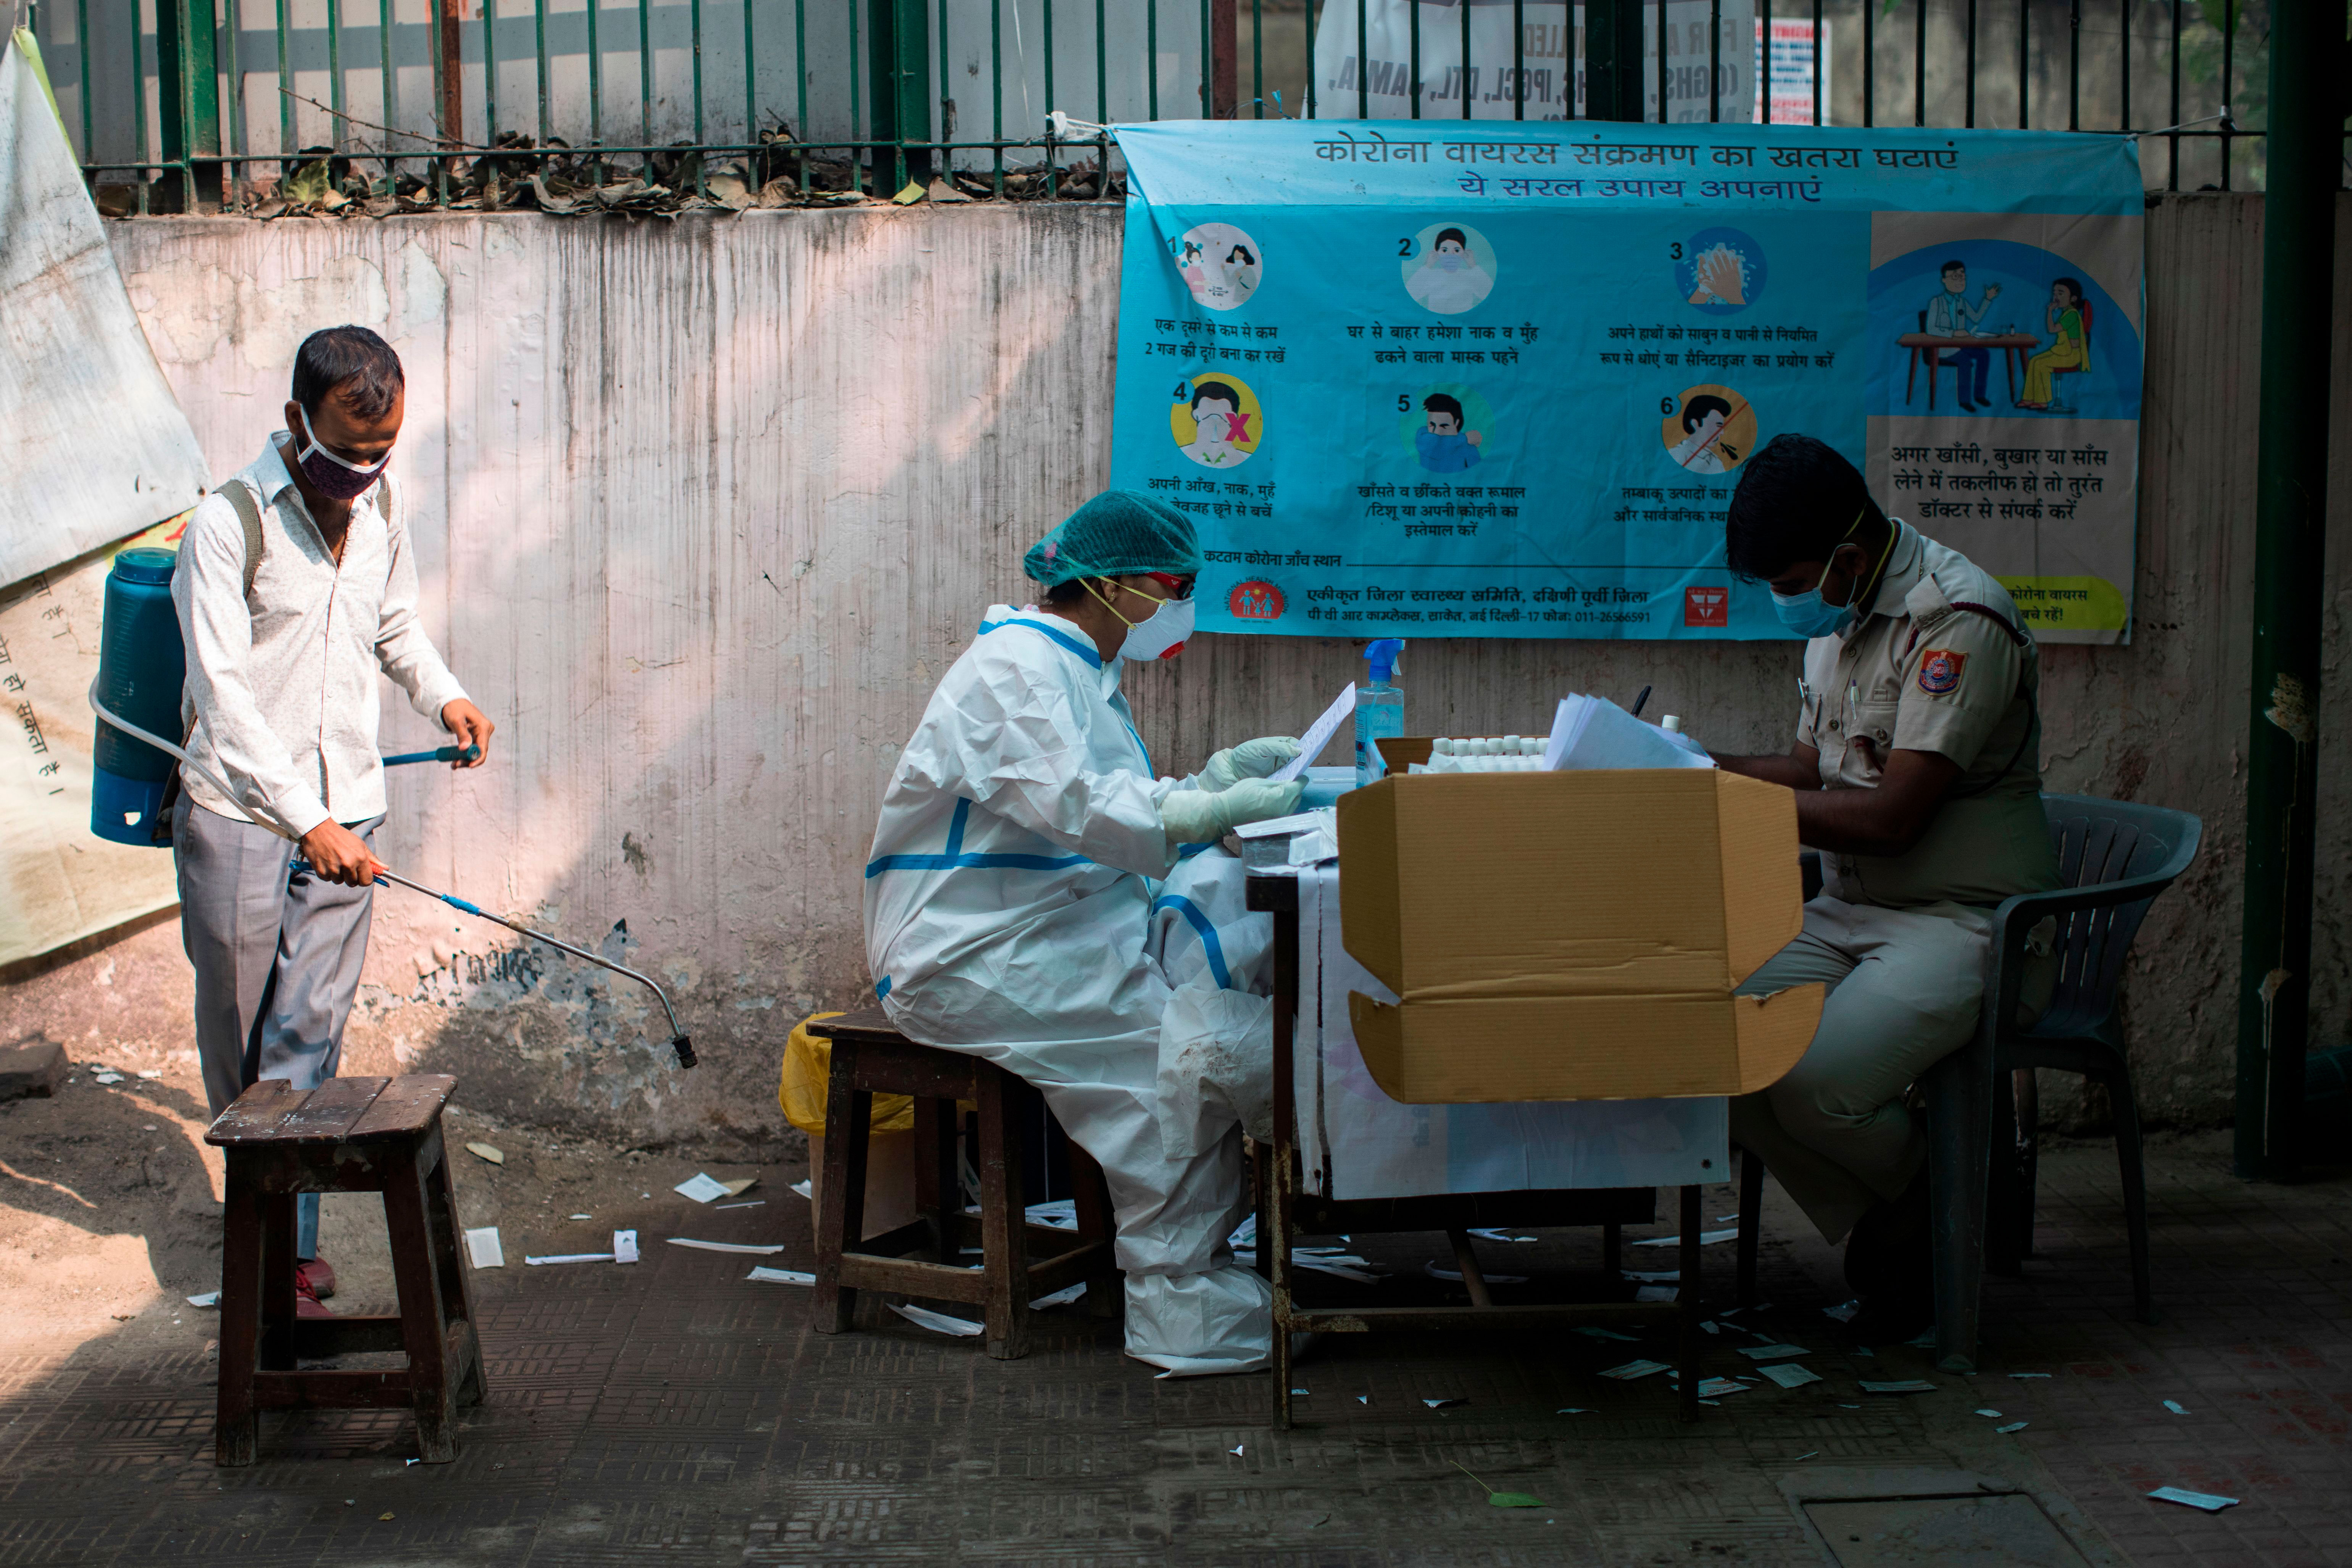 Workers sort swab samples for Covid-19 rapid antigen tests in New Delhi on November 10.